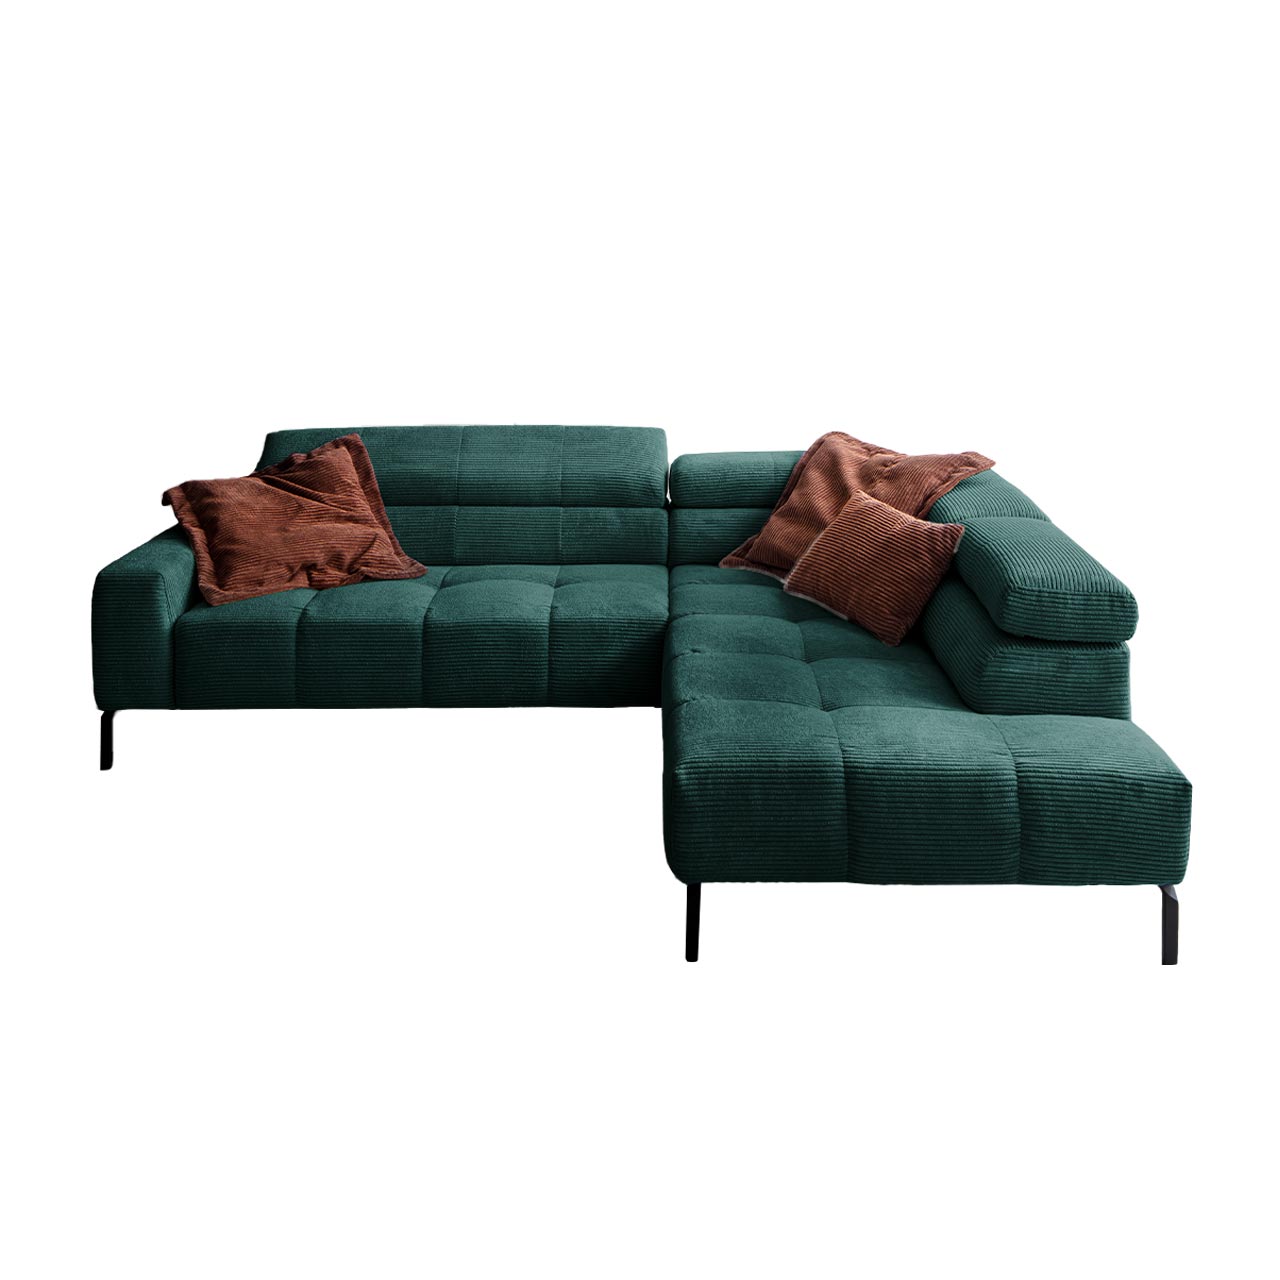 TL - Modell: Cord rechts Sofa Longchair | 2746 Farbe: Grün